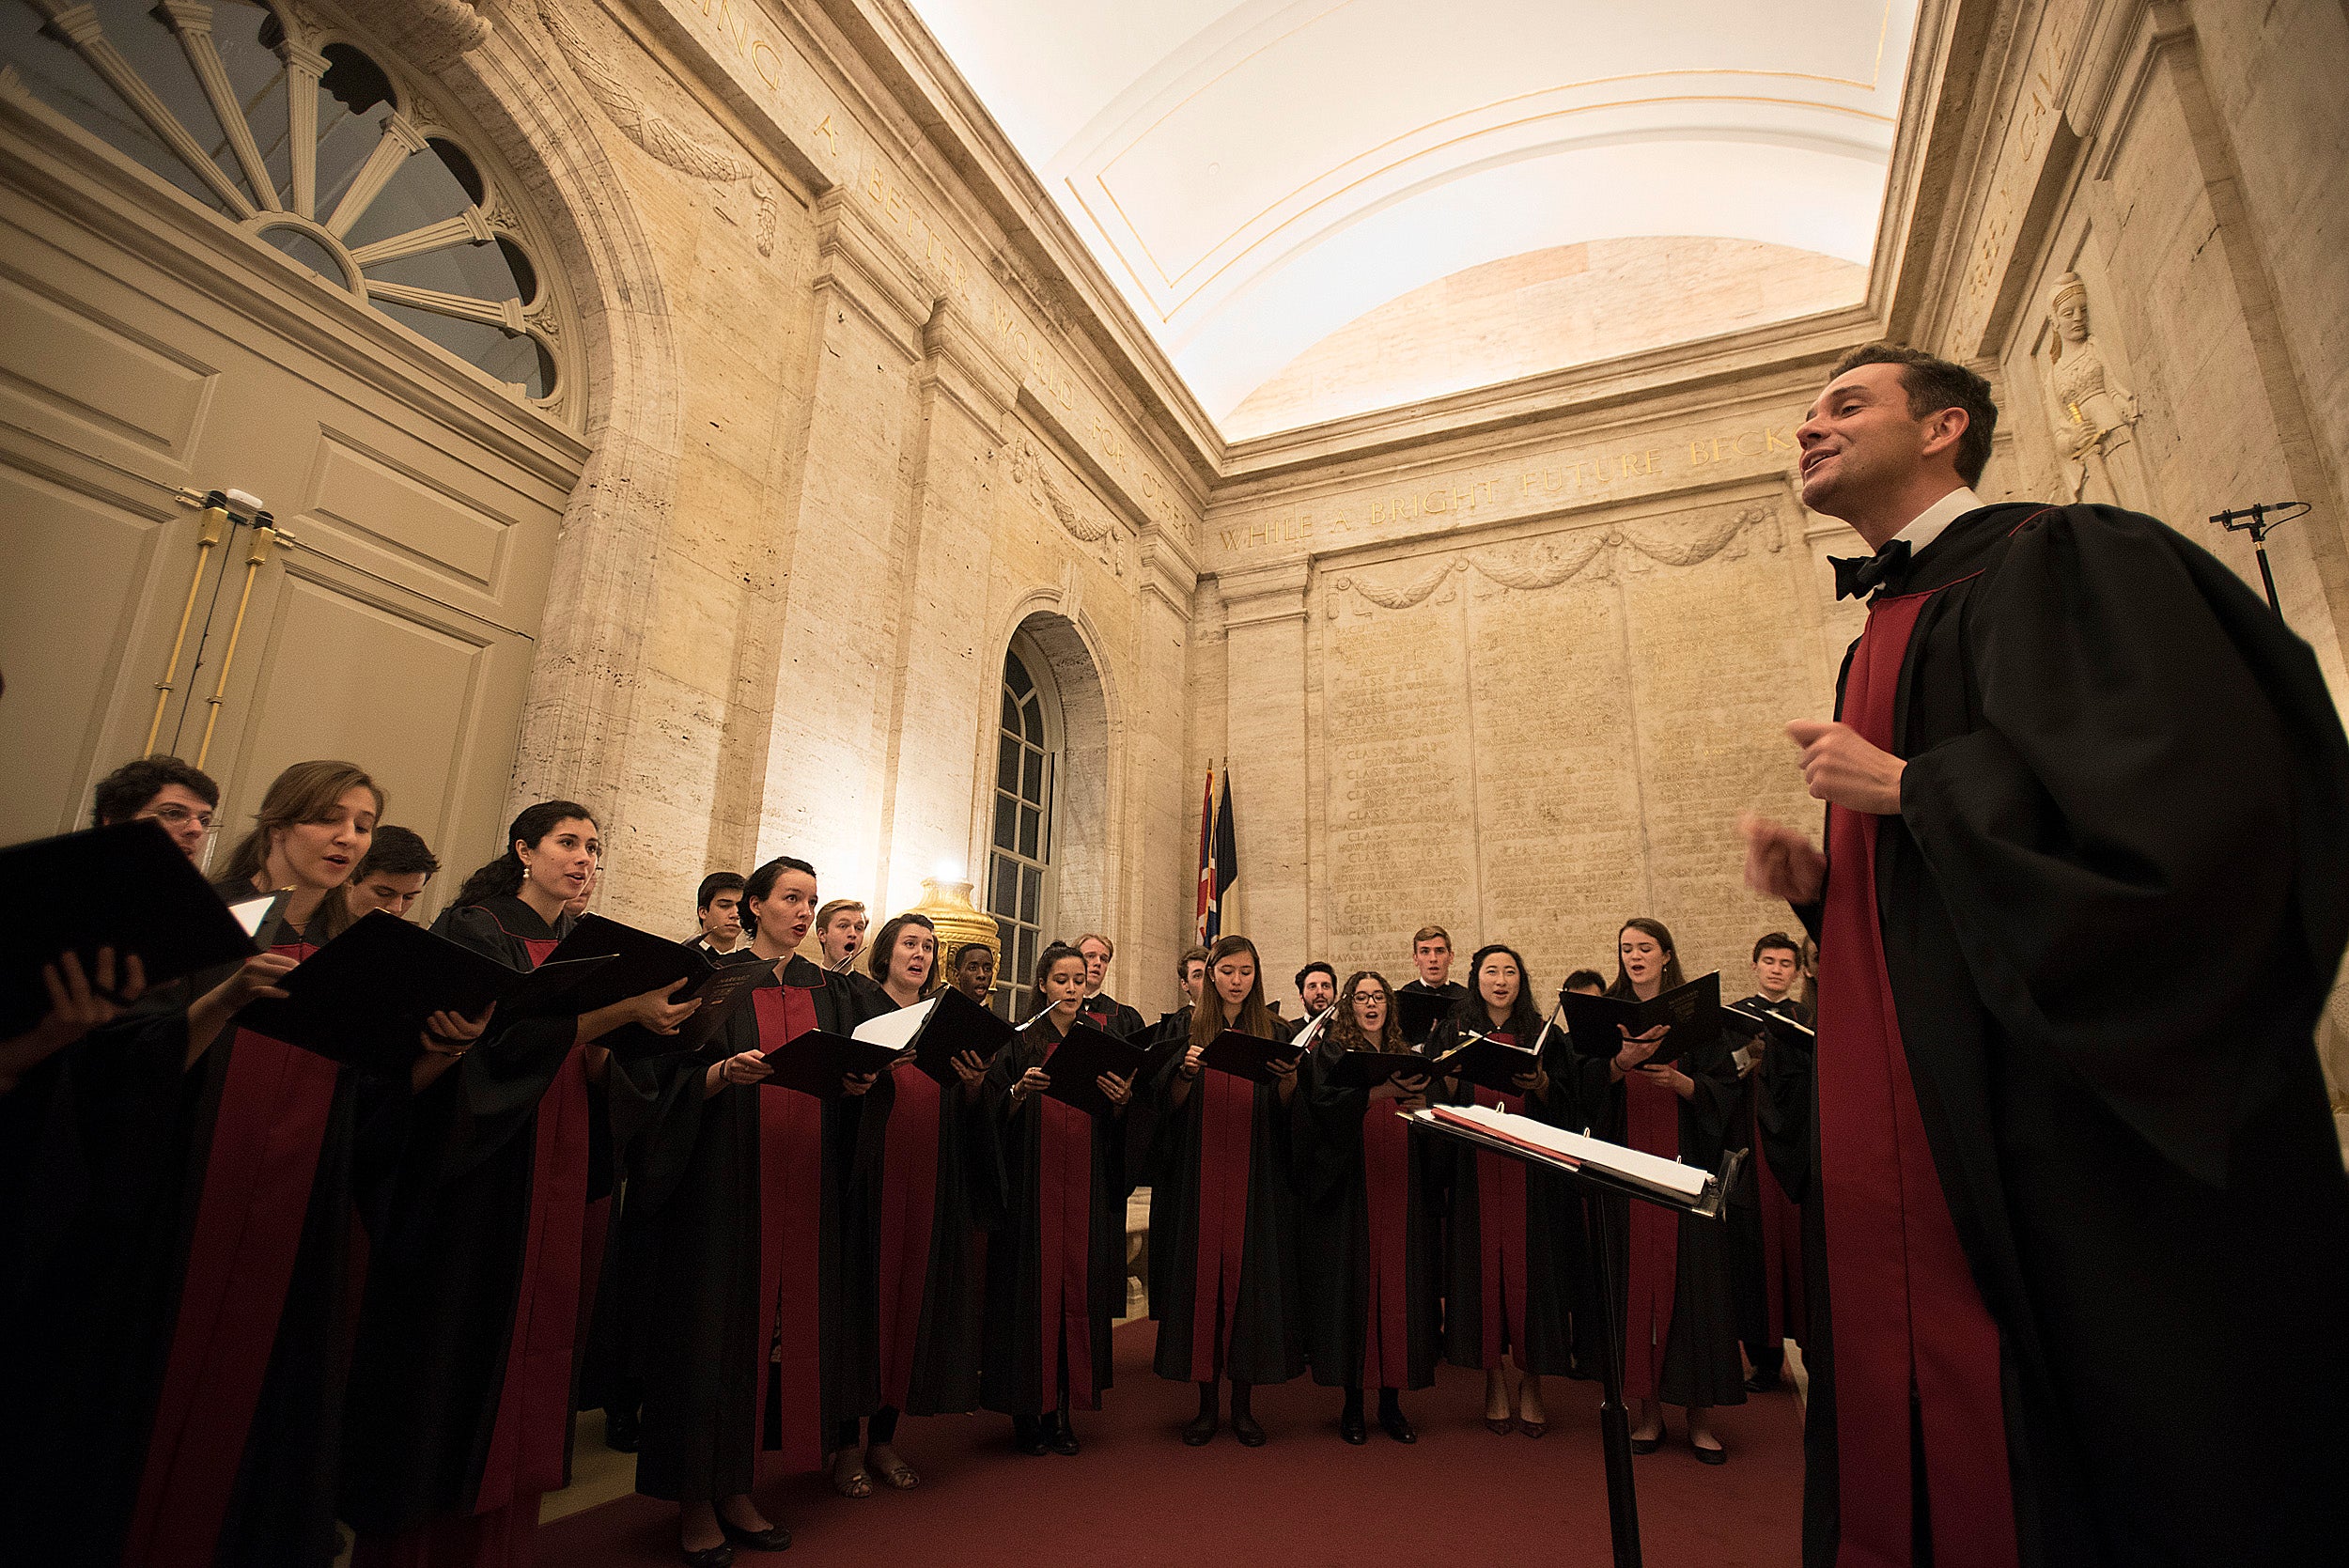 Choir singers ring conductor.